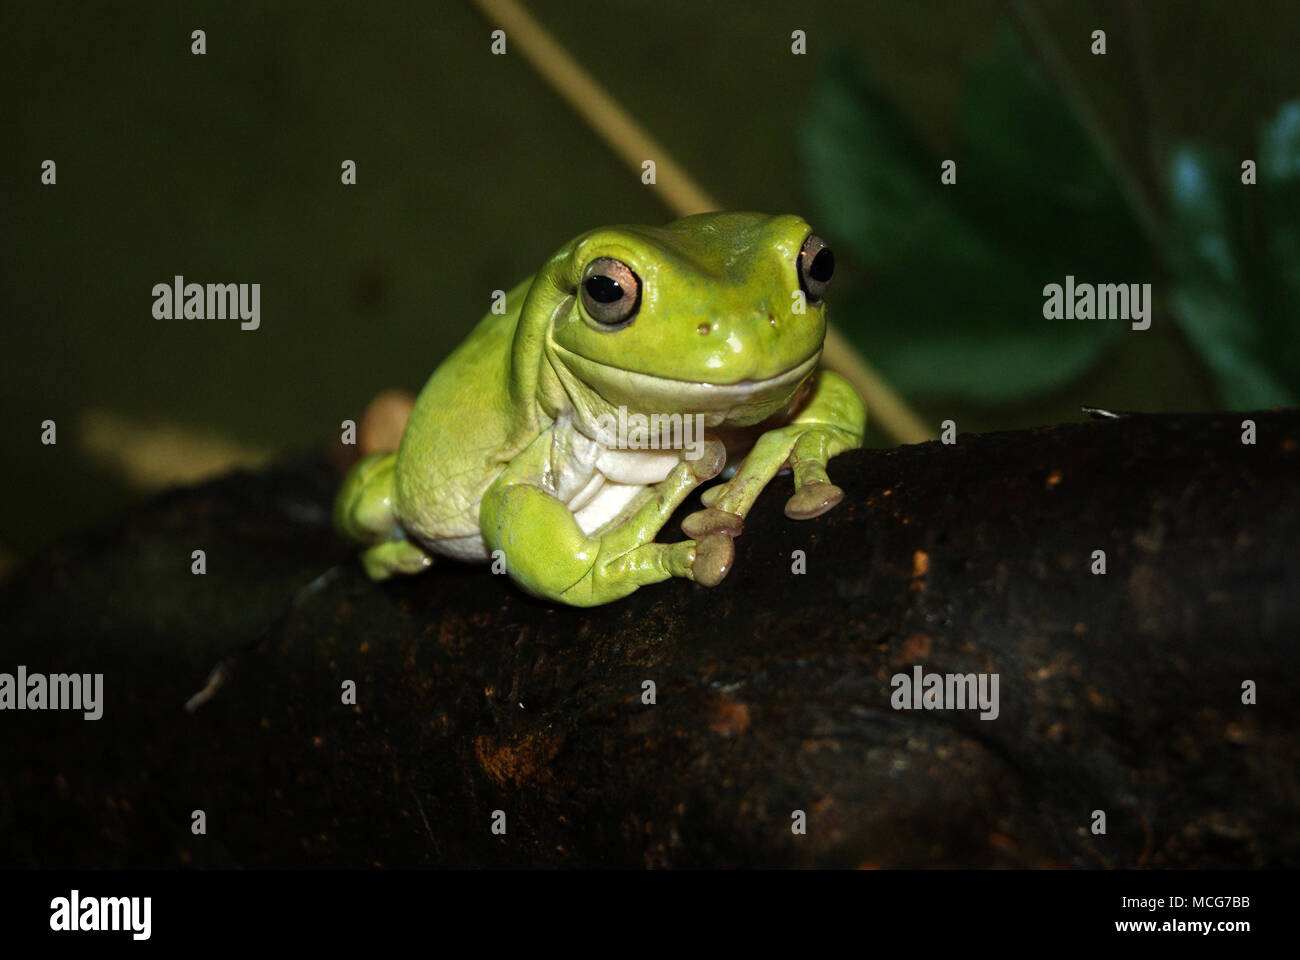 Australian green tree frog (Litoria caerulea, White's or dumpy tree frog) closeup on a dark background Stock Photo